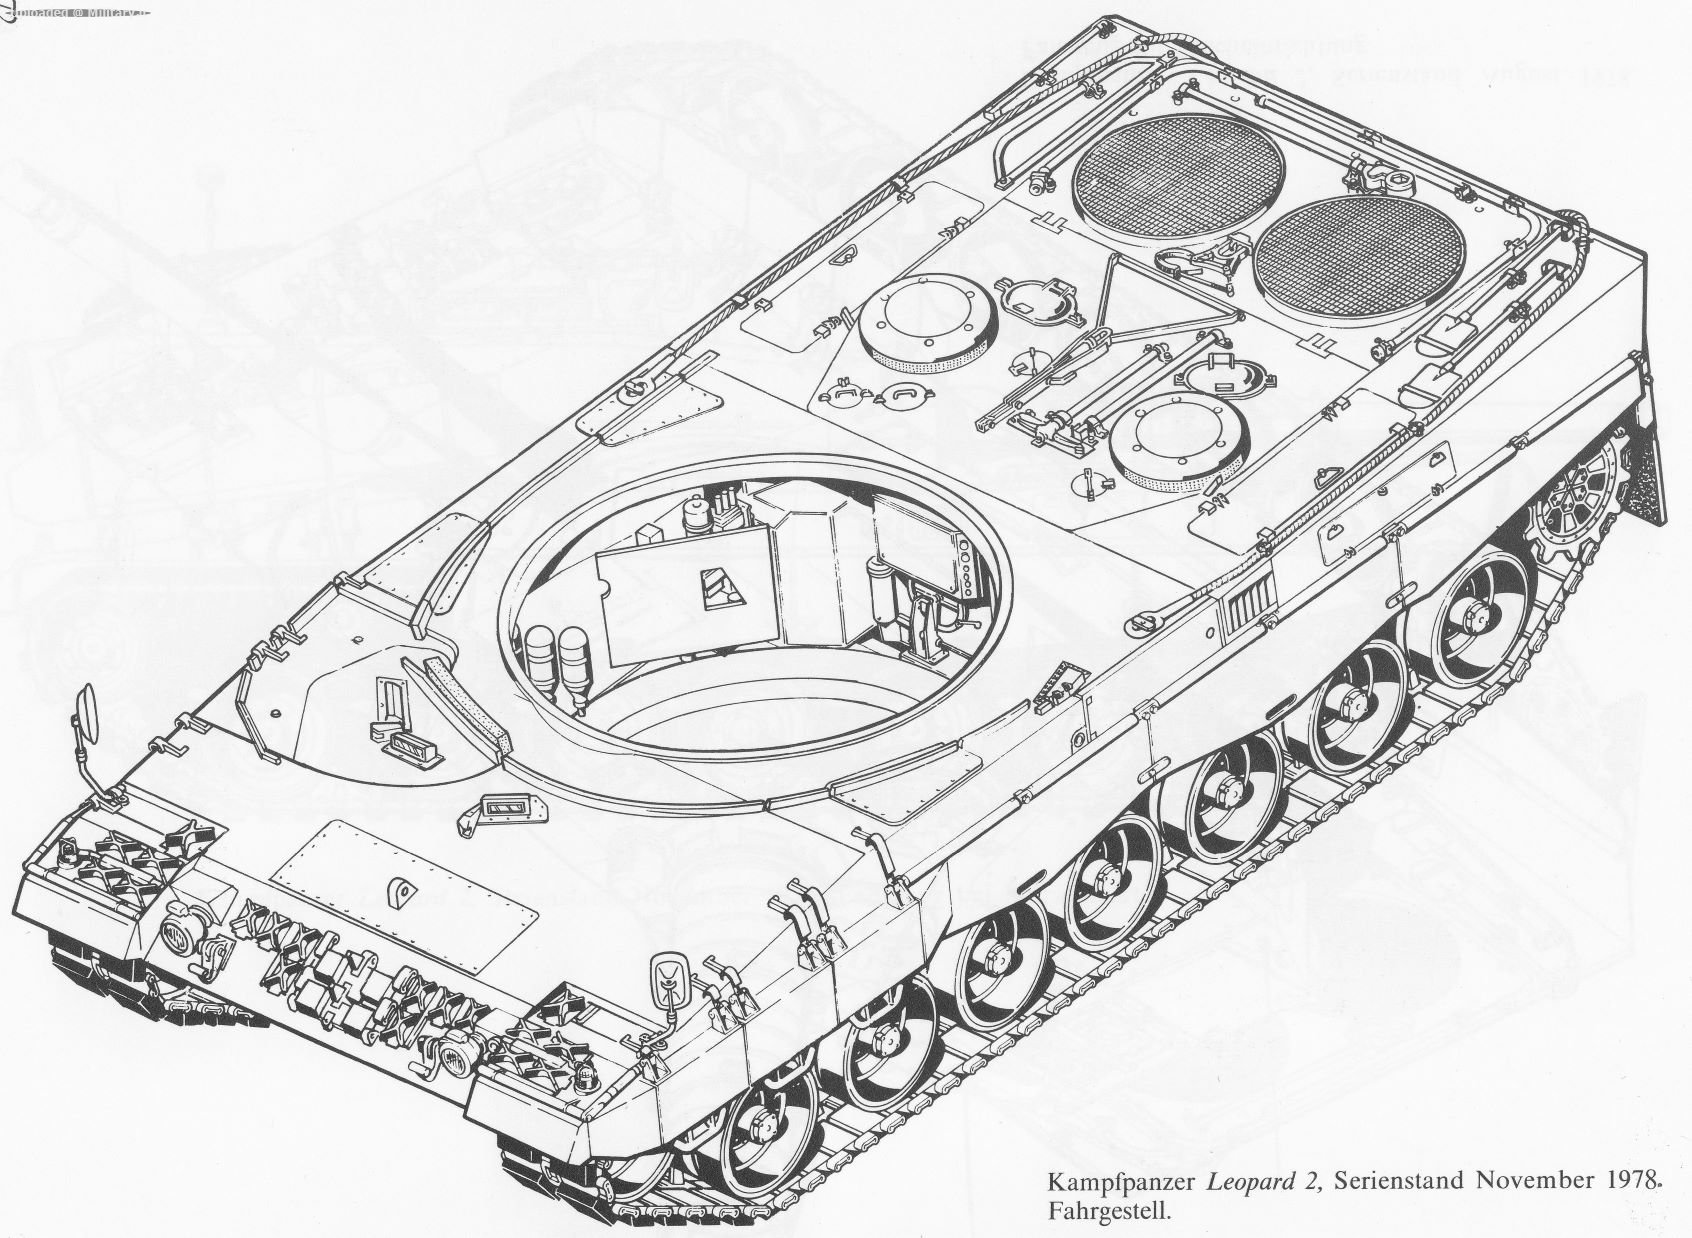 Kampfpanzer-Leopard-2-Serienstand-Novemb